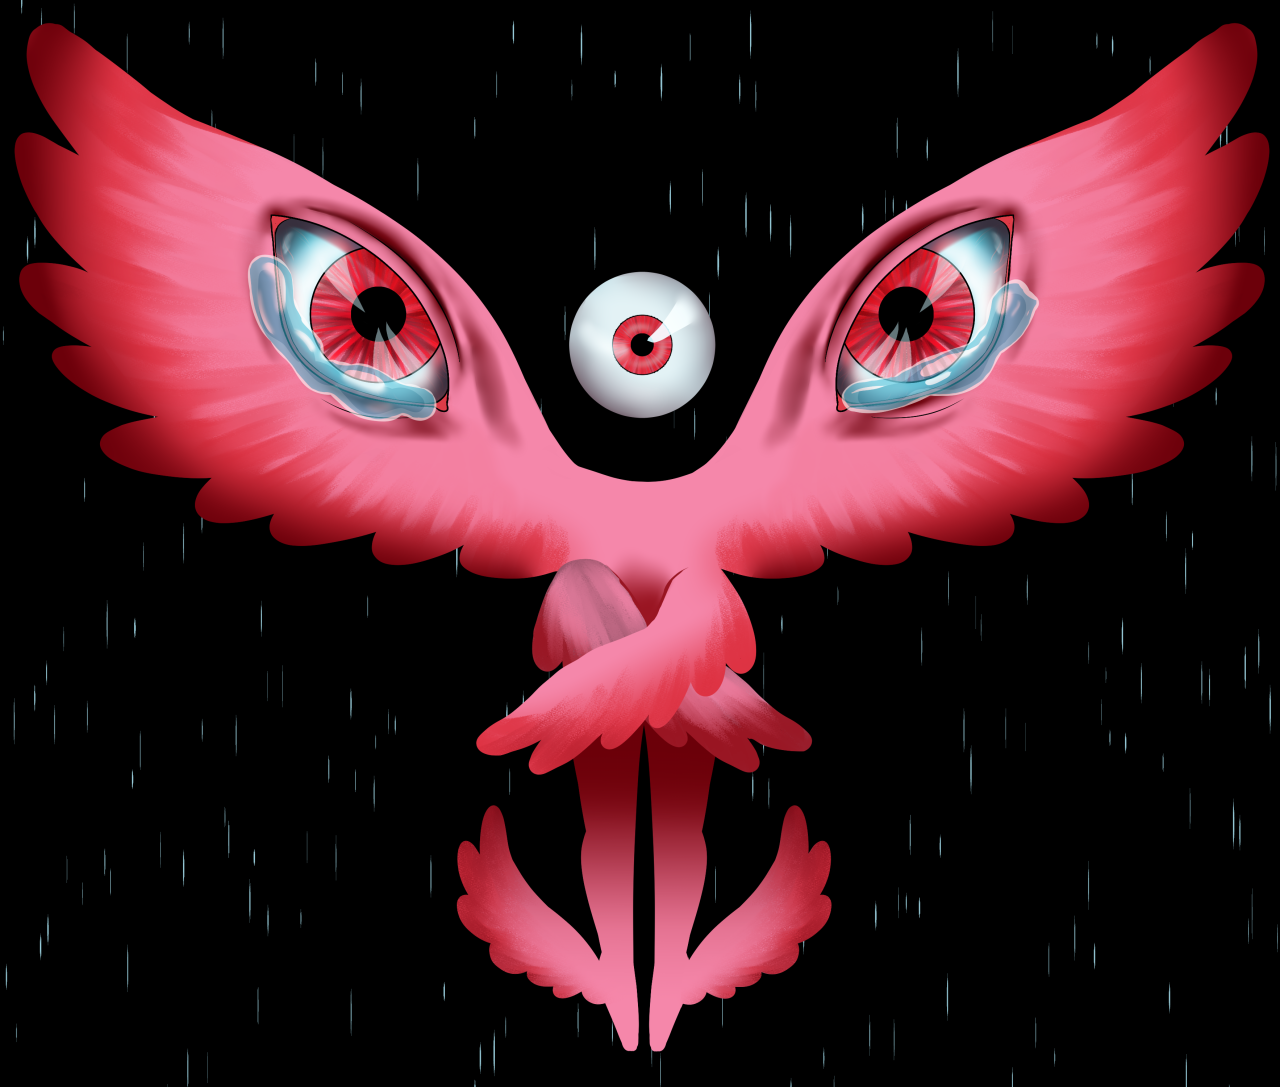 Angel #Angel#digital art#eye#object head#eyes#horror #for an artgame i was in